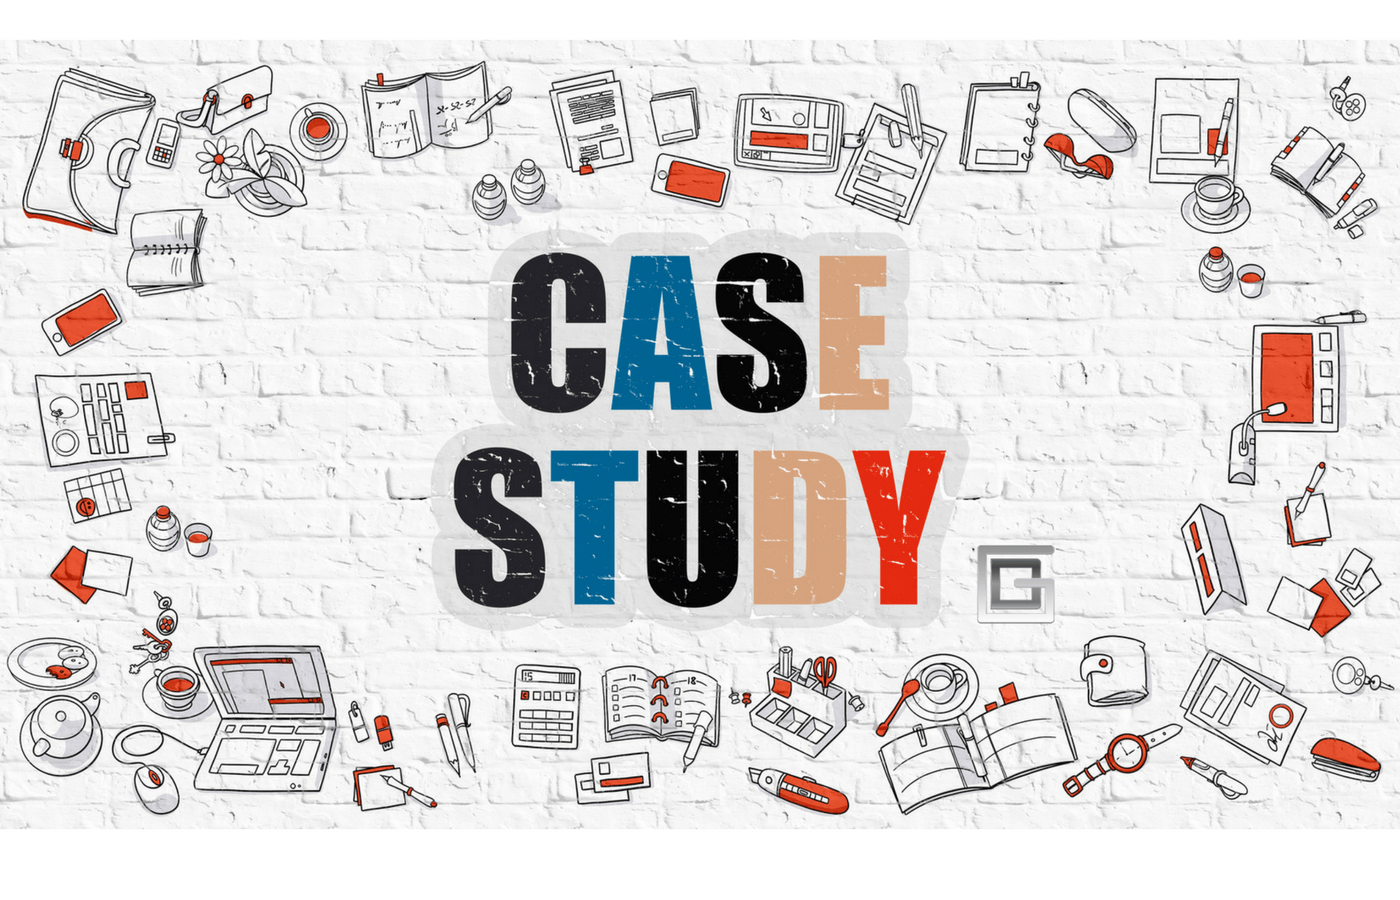 CaseStudy